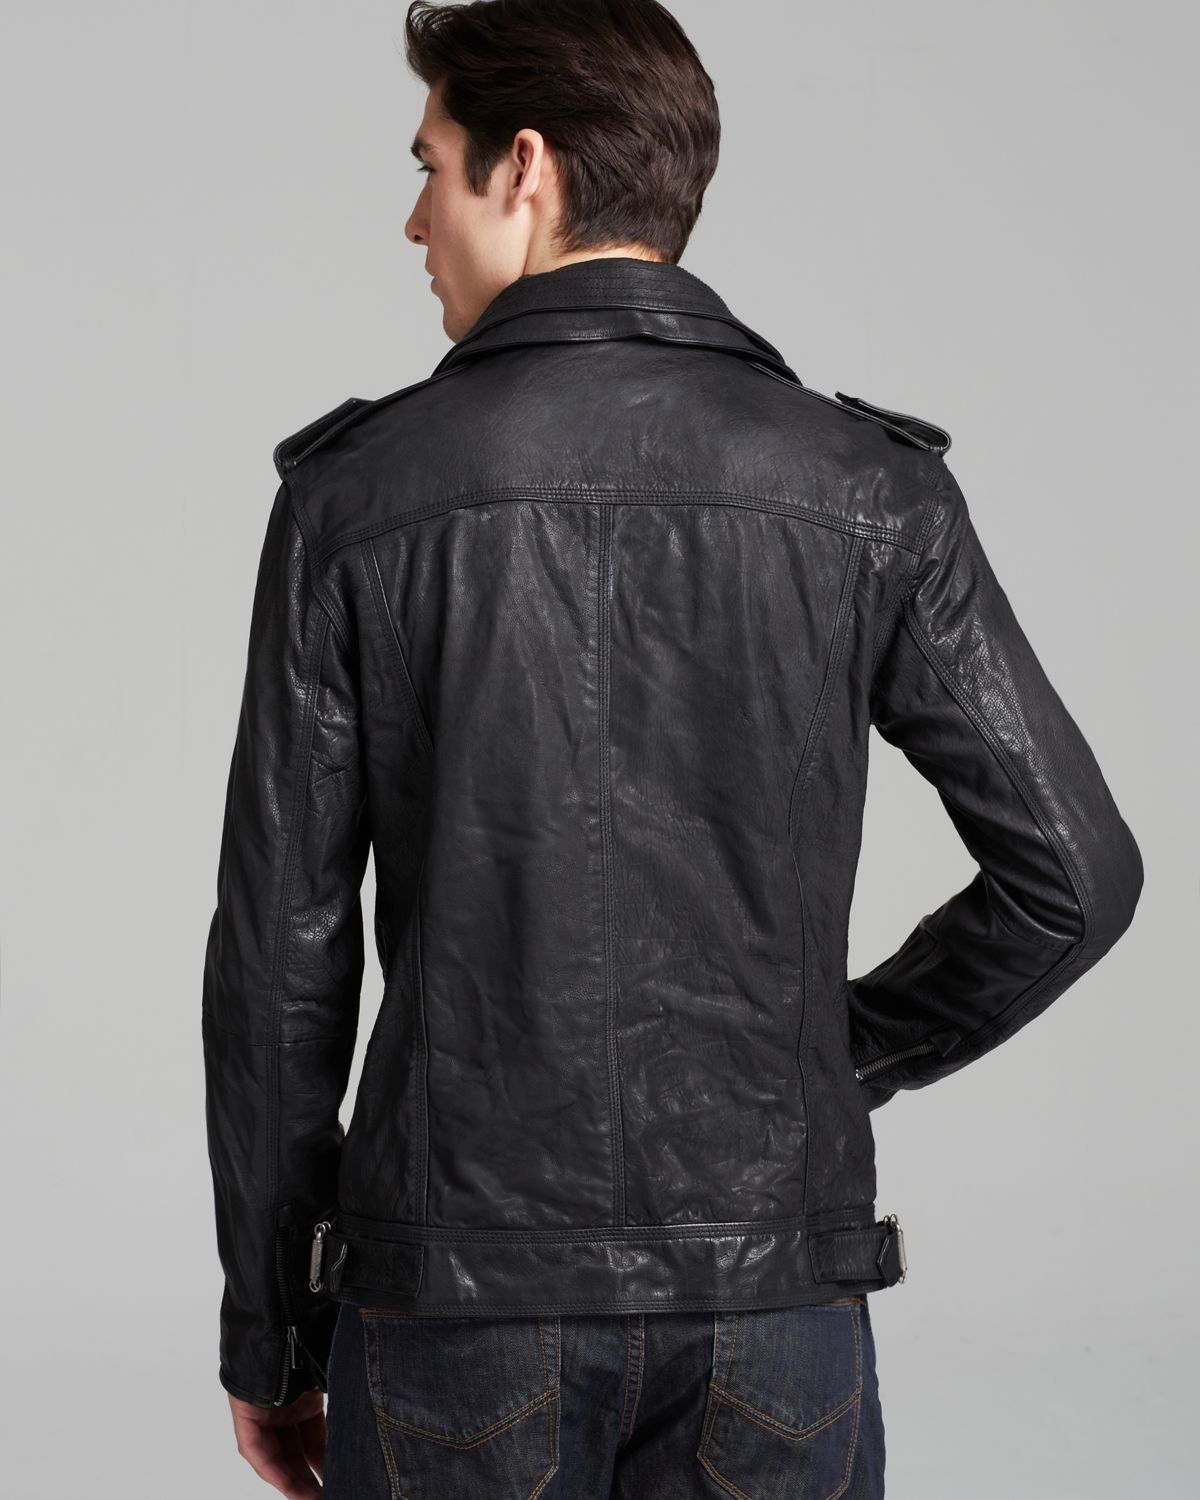 Superdry Ryan Leather Jacket in Black for Men - Lyst